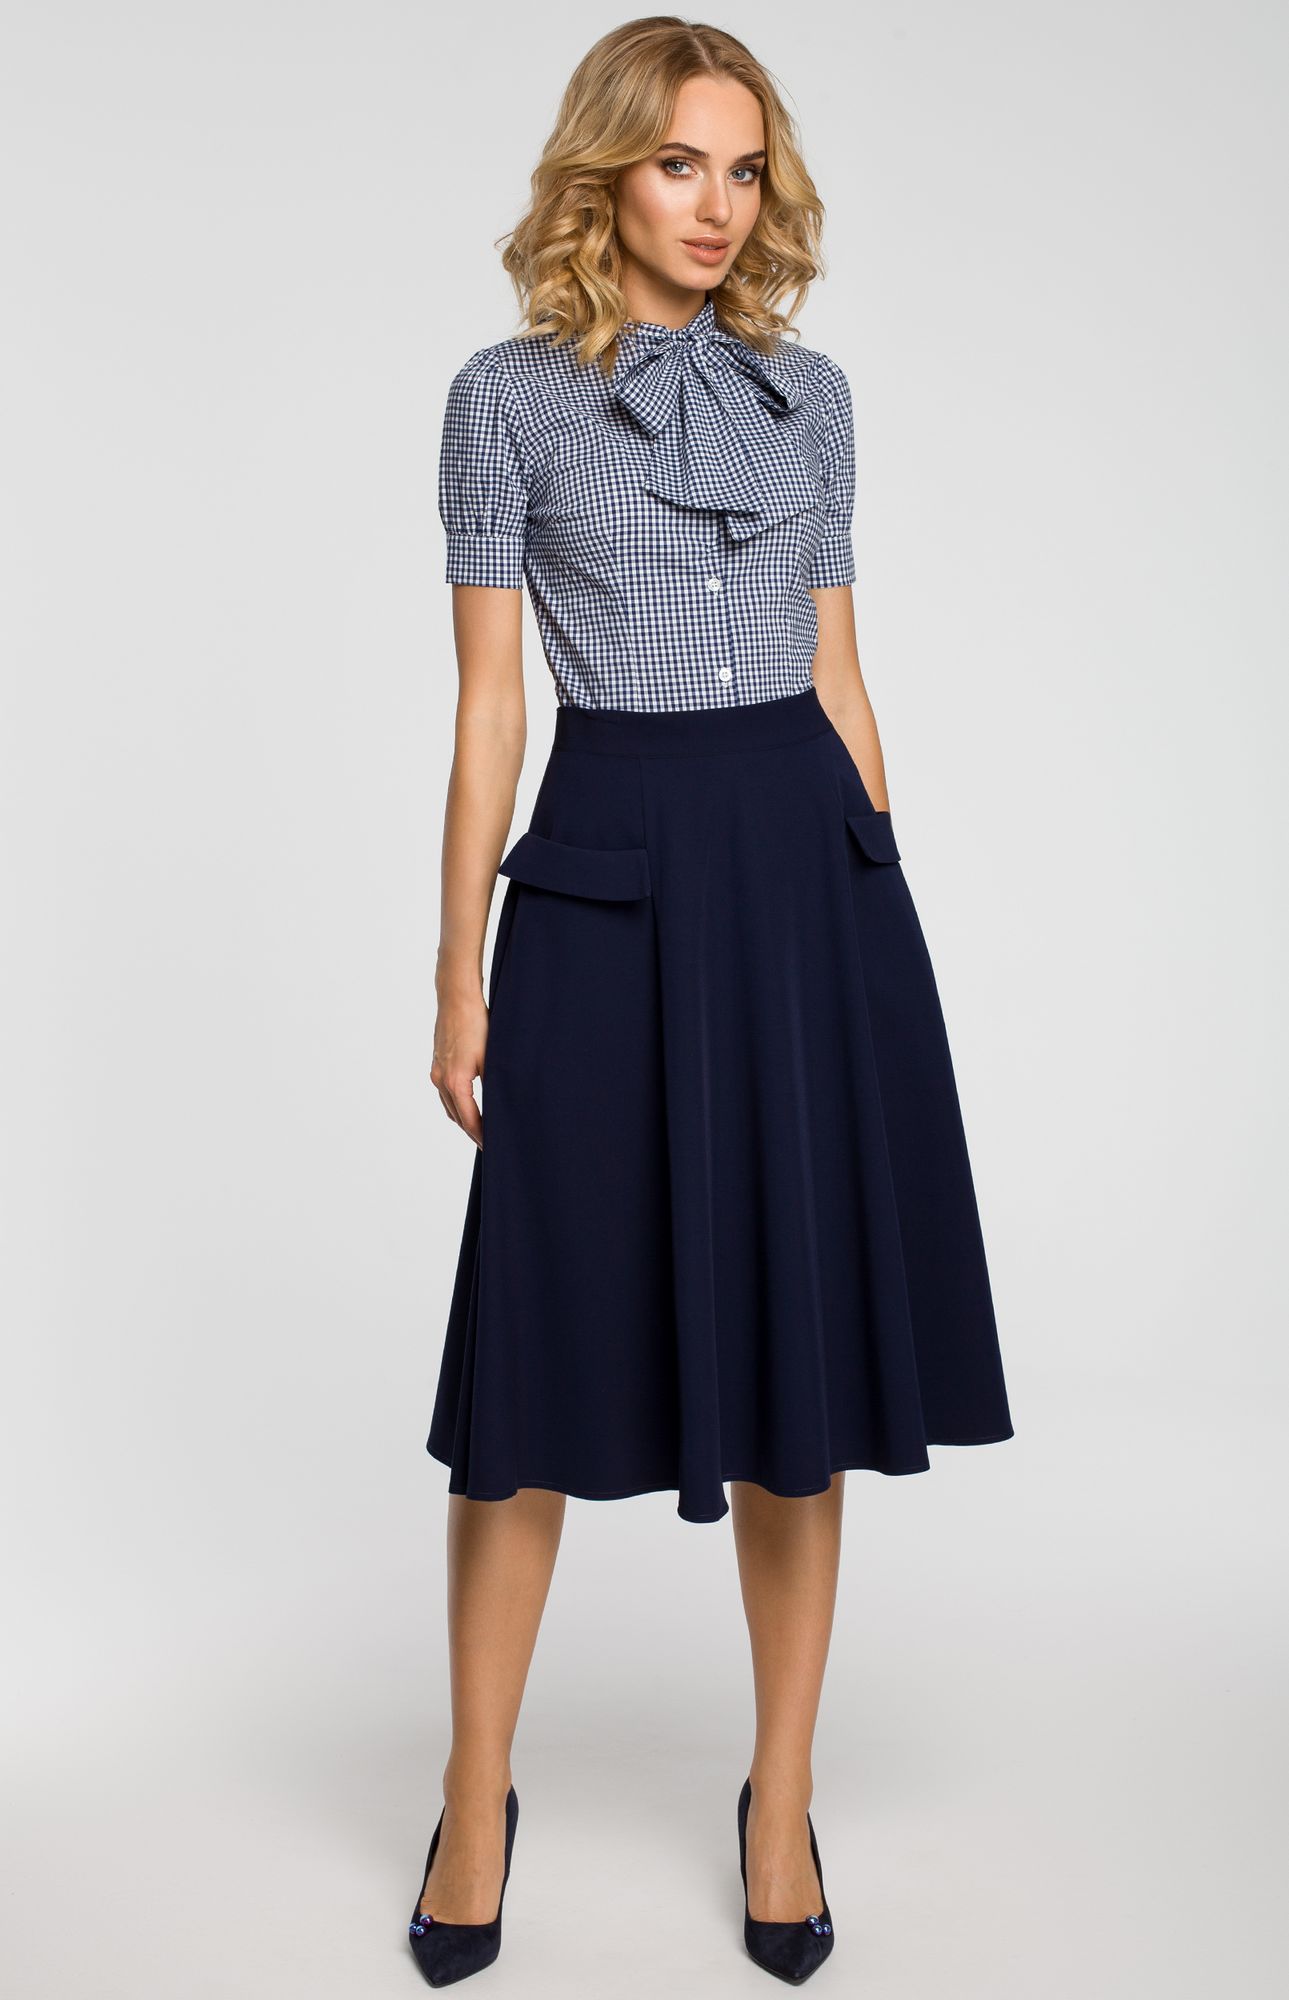 Navy blue pockets flared skirt